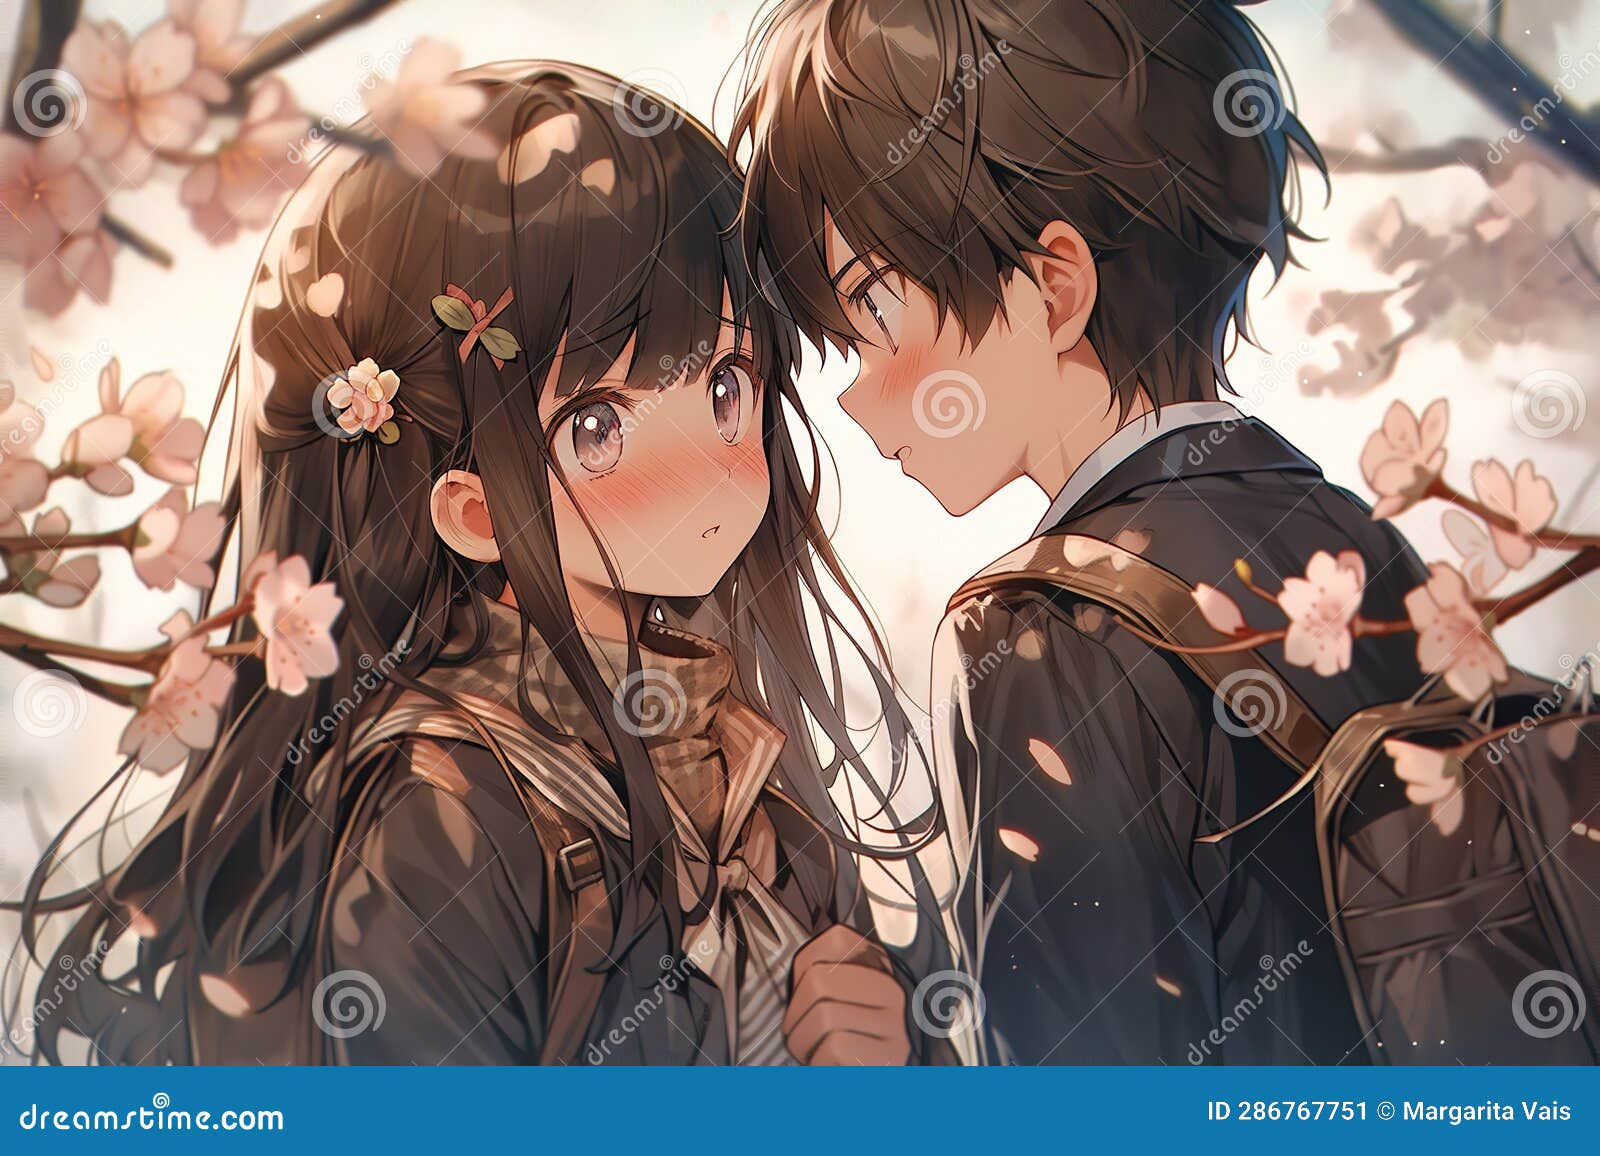 8911 Anime Girl Boy Images Stock Photos  Vectors  Shutterstock